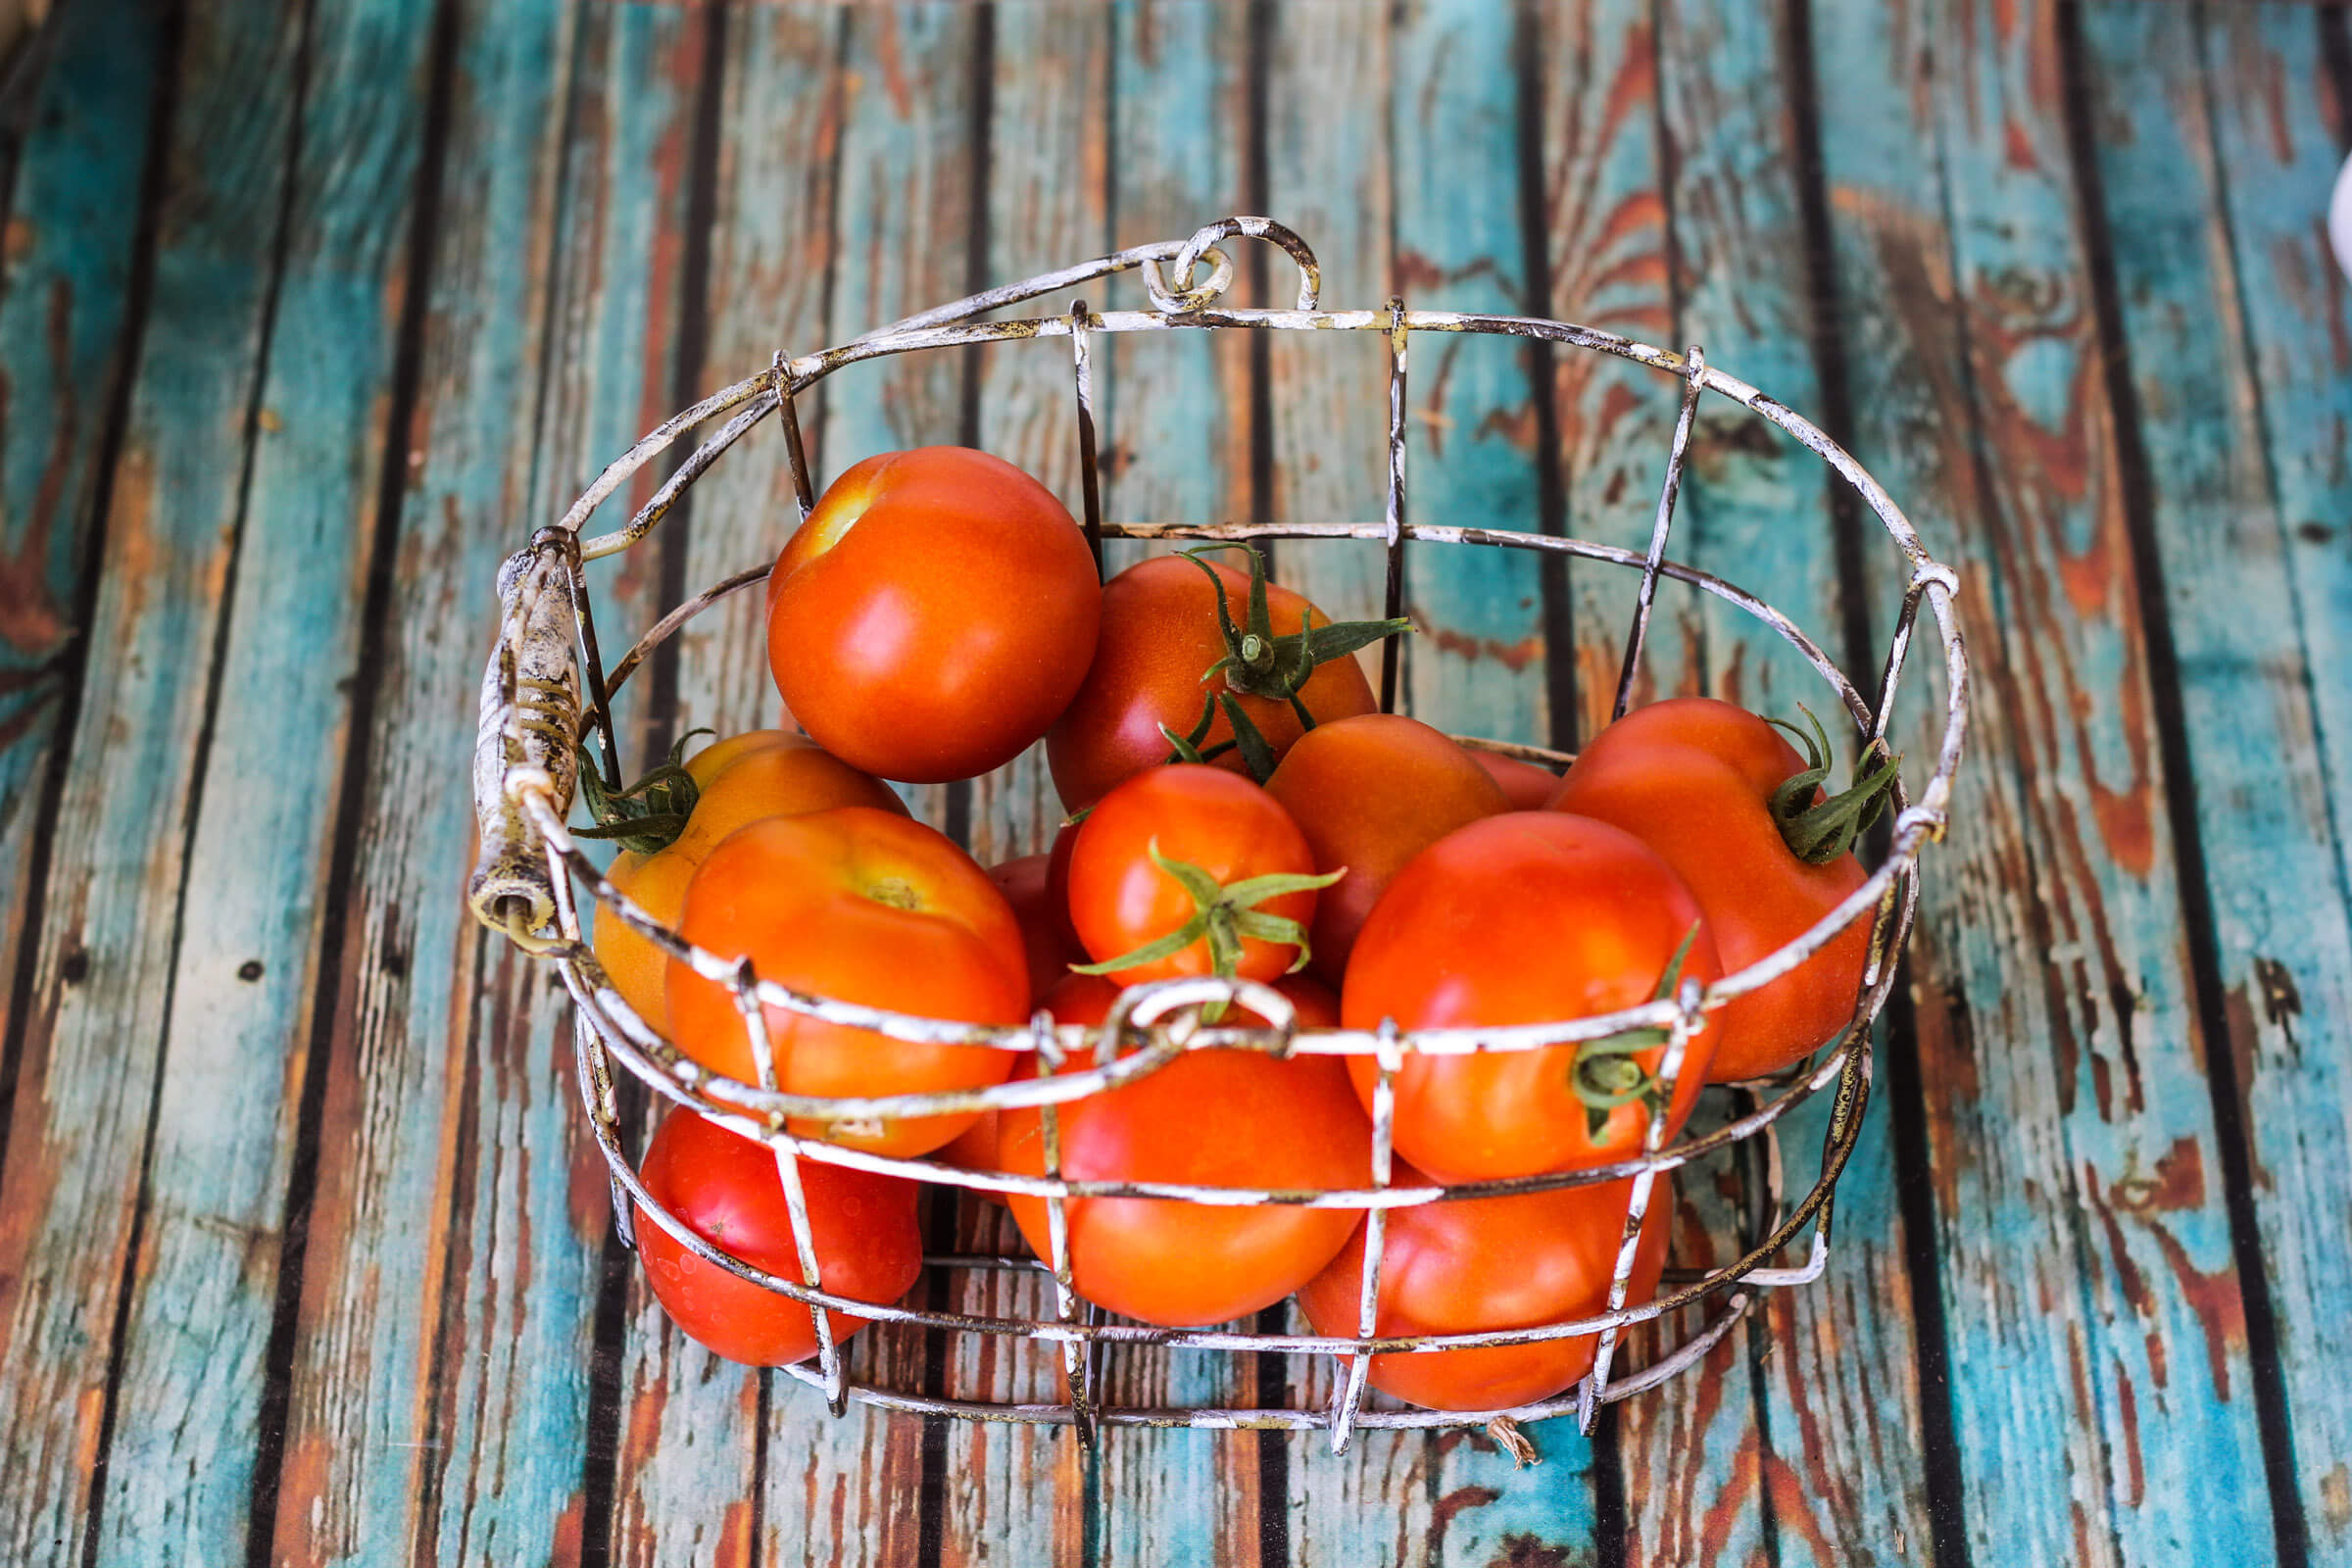 Spring 2016 Backyard Farm Tour - Tomatoes | Weed 'em & Reap